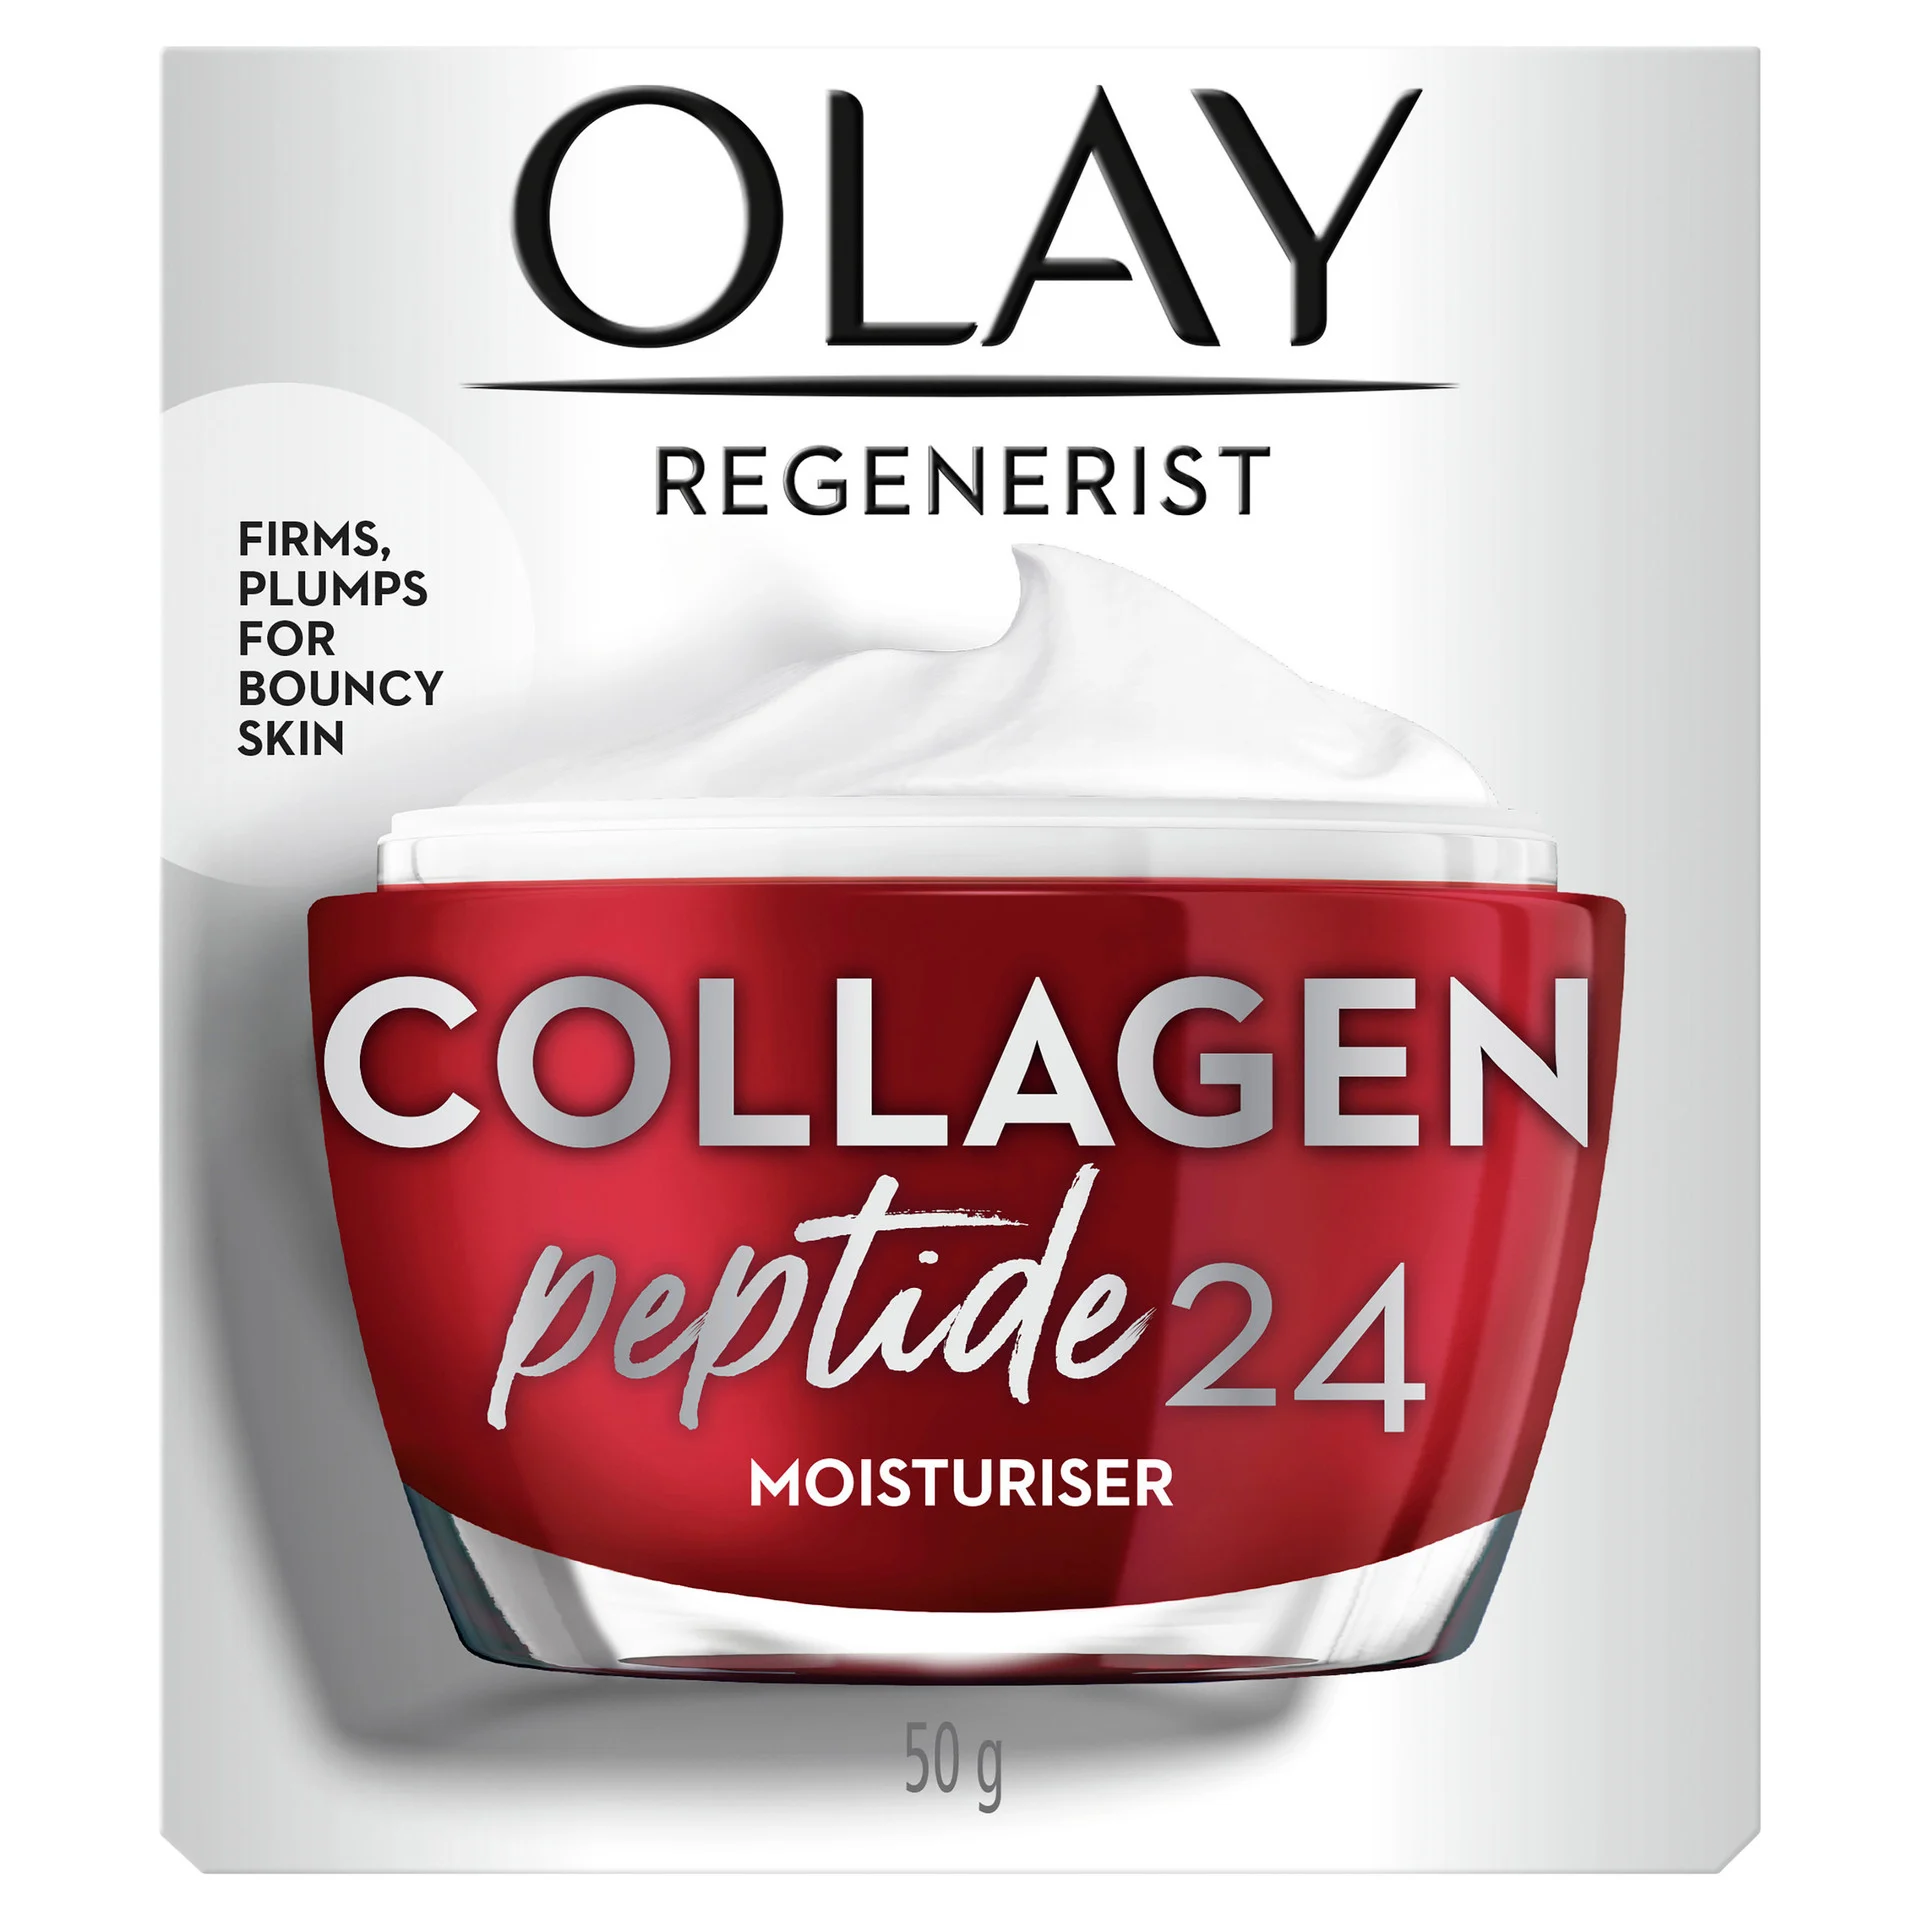 Collagen Peptide 24 Plumping Face Moisturiser - 50g